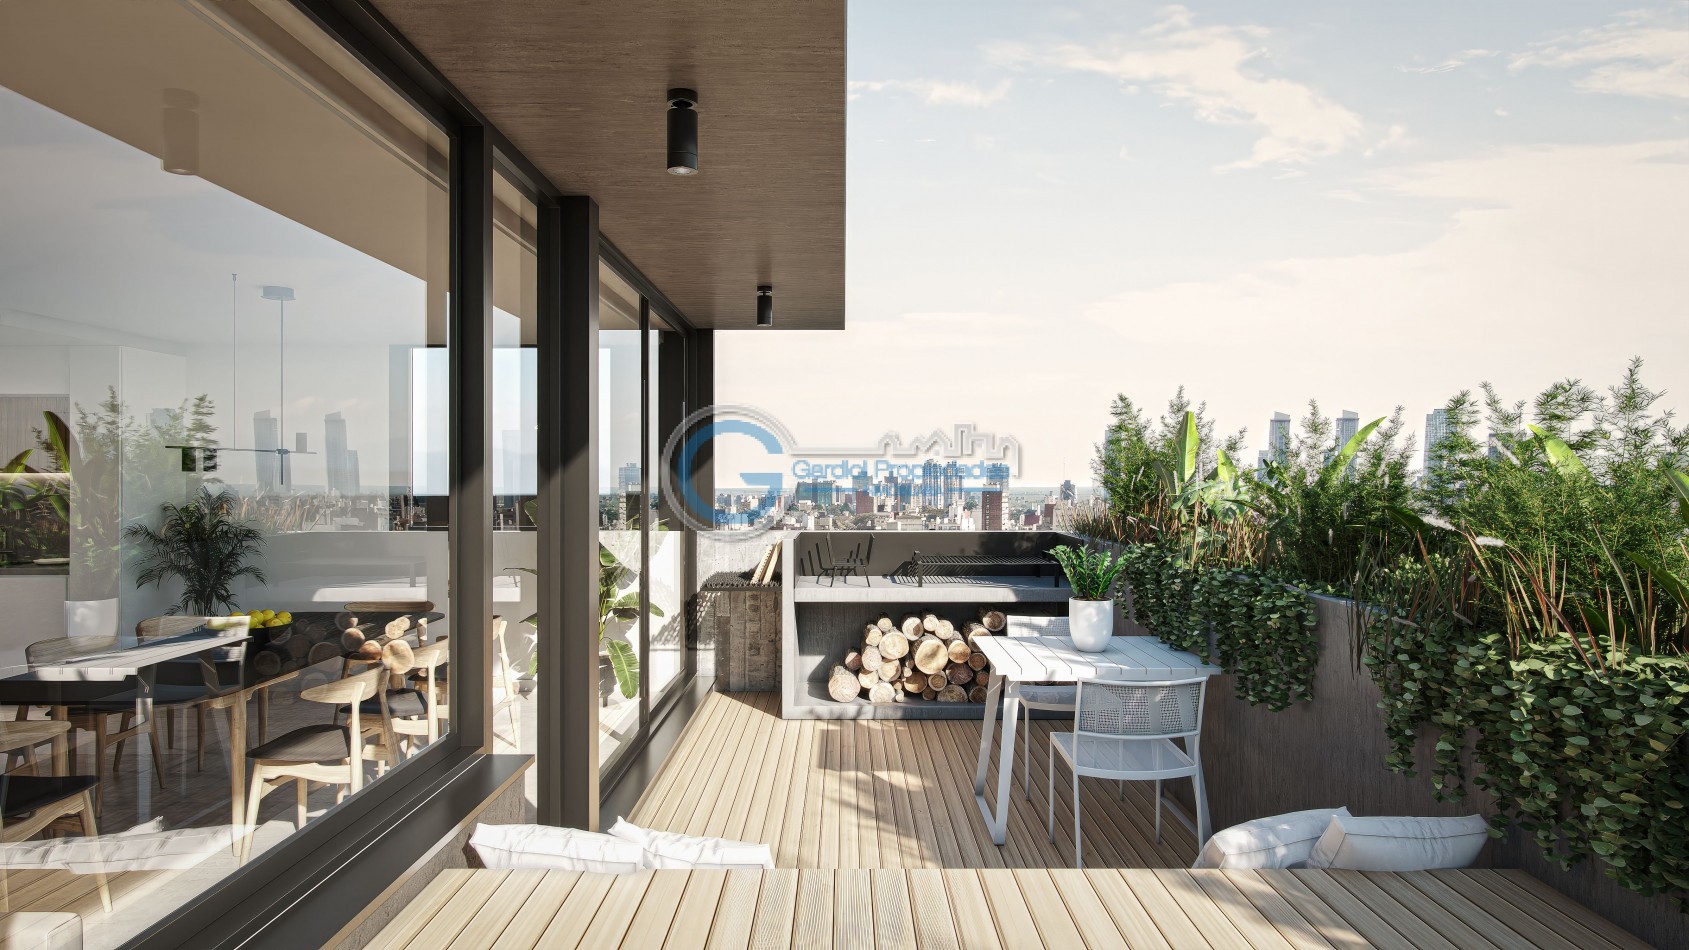 UN DORMITORIO, balcon al frente - Amenities - FINANCIACION - Entrega 2027 - Av. Pellegrini 900